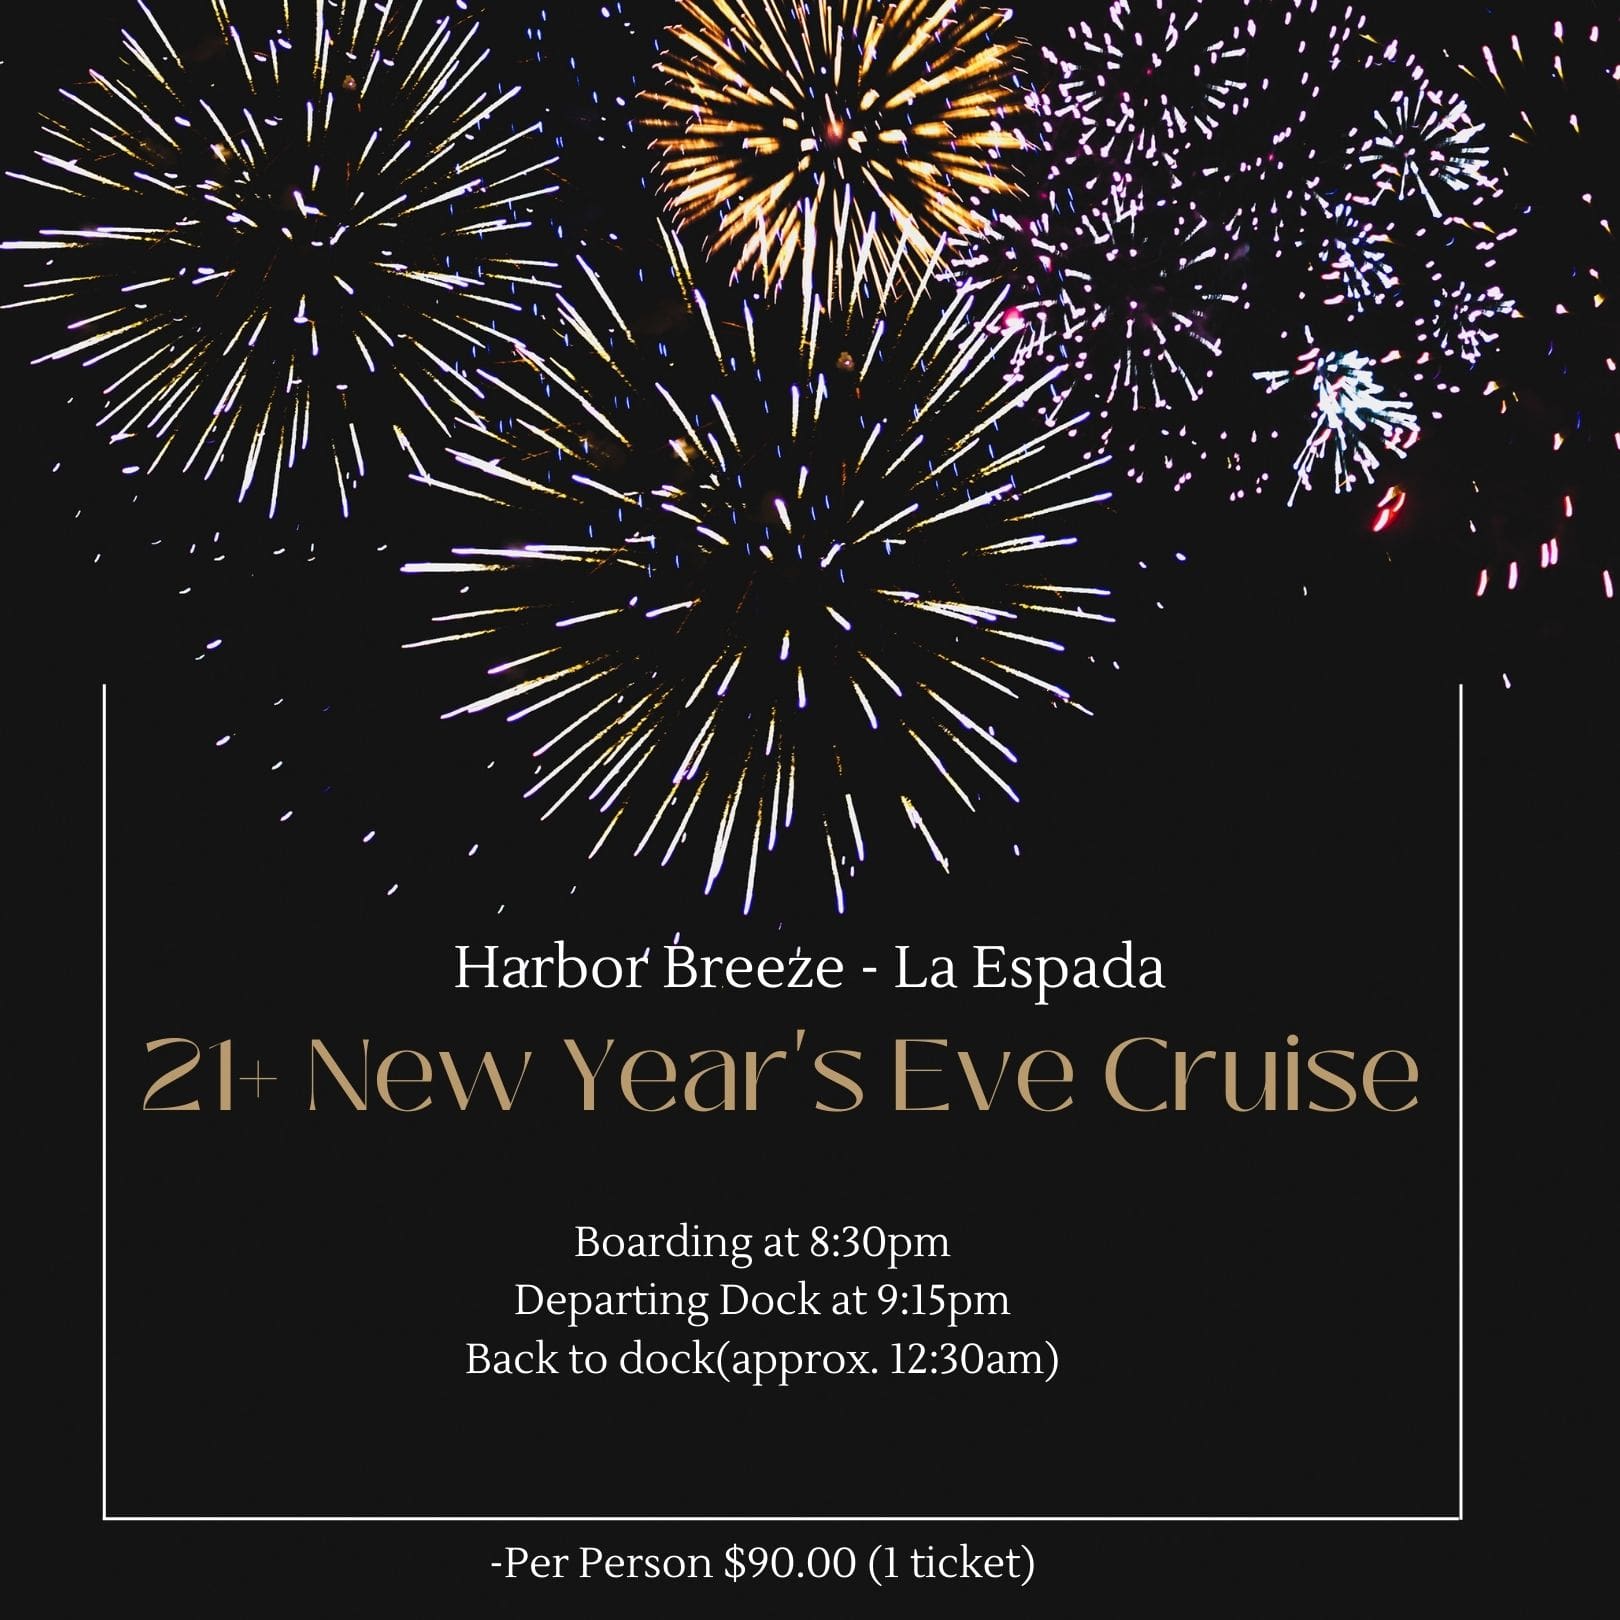 21+ New Year’s Eve Cruise on La Espada